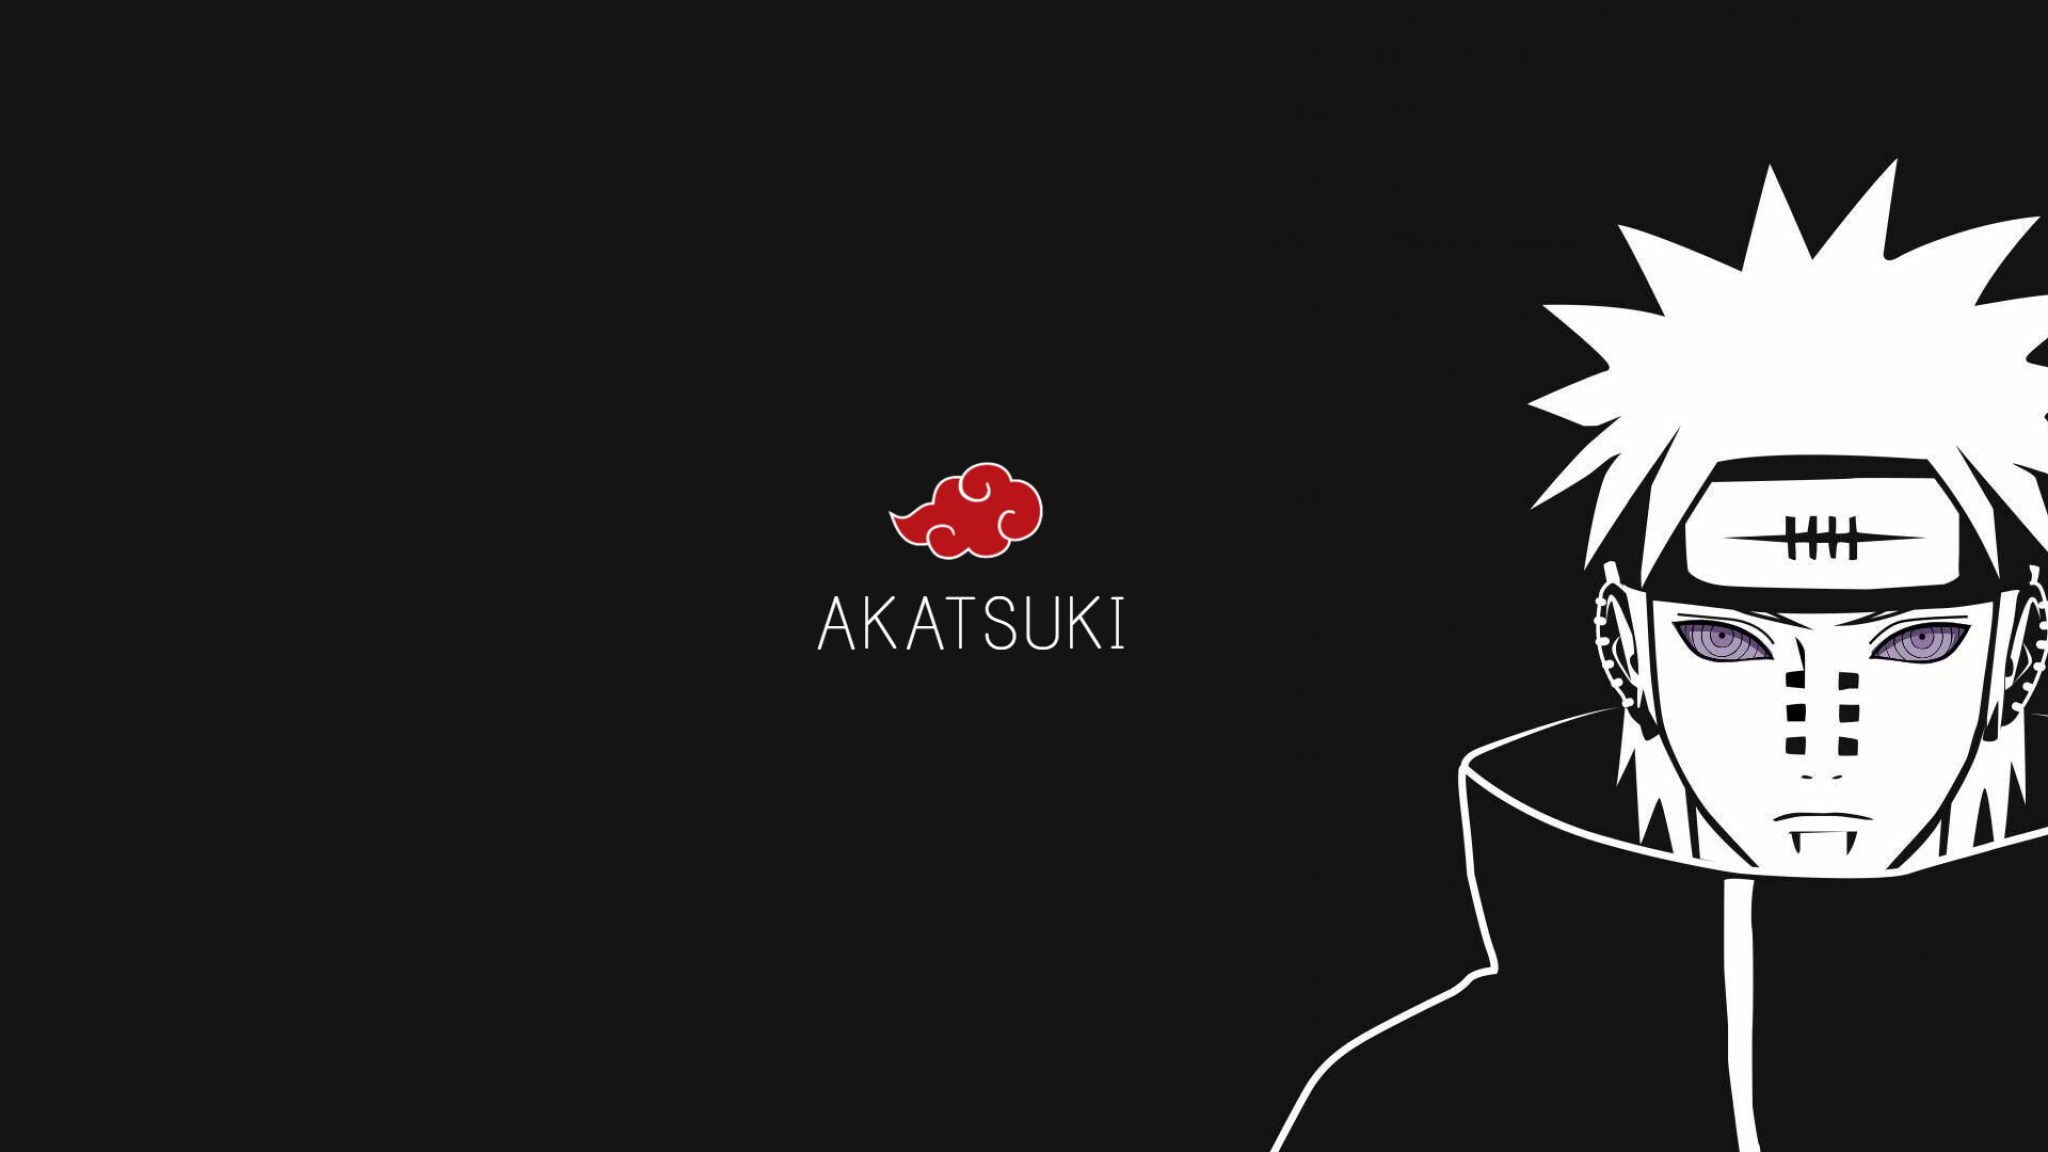 48x1152 Akatsuki Naruto 48x1152 Resolution Wallpaper Hd Anime 4k Wallpapers Images Photos And Background